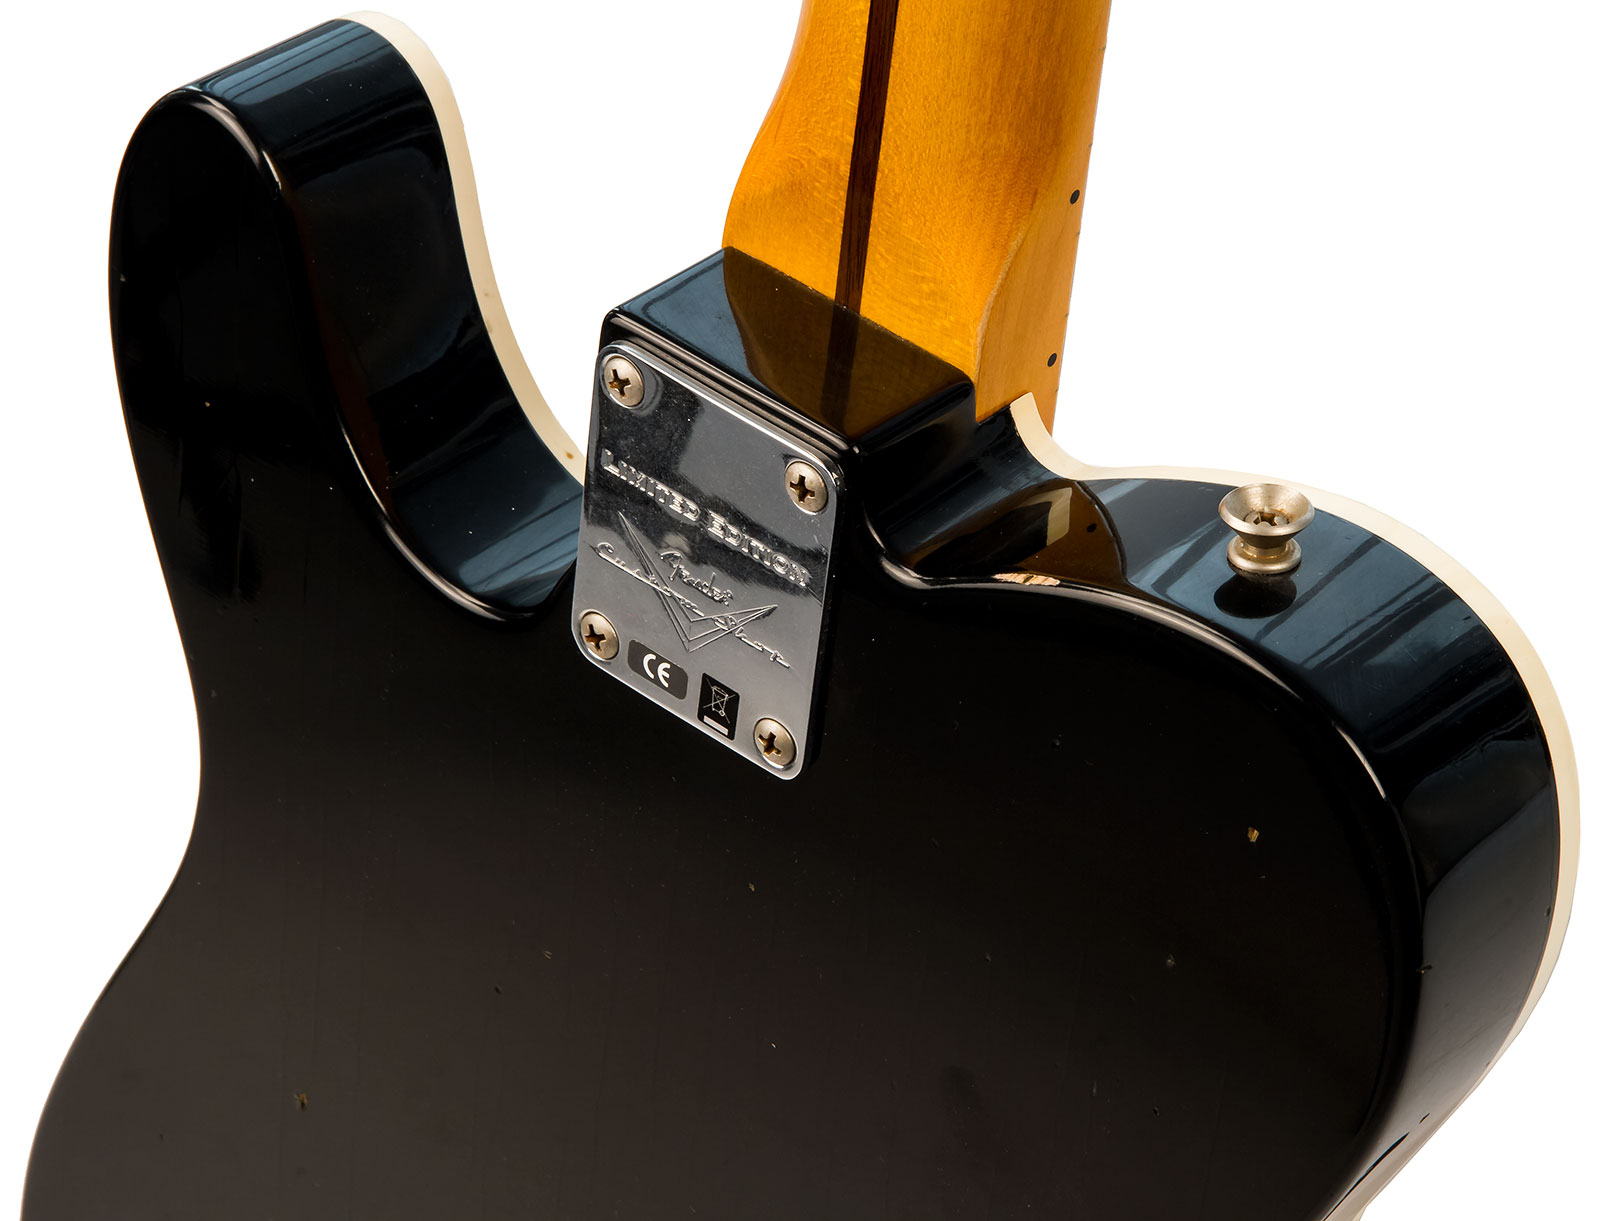 Fender Custom Shop Double Esquire/tele Custom 2s Ht Mn #r97434 - Journeyman Relic Aged Pink Paisley - Semi hollow elektriche gitaar - Variation 4